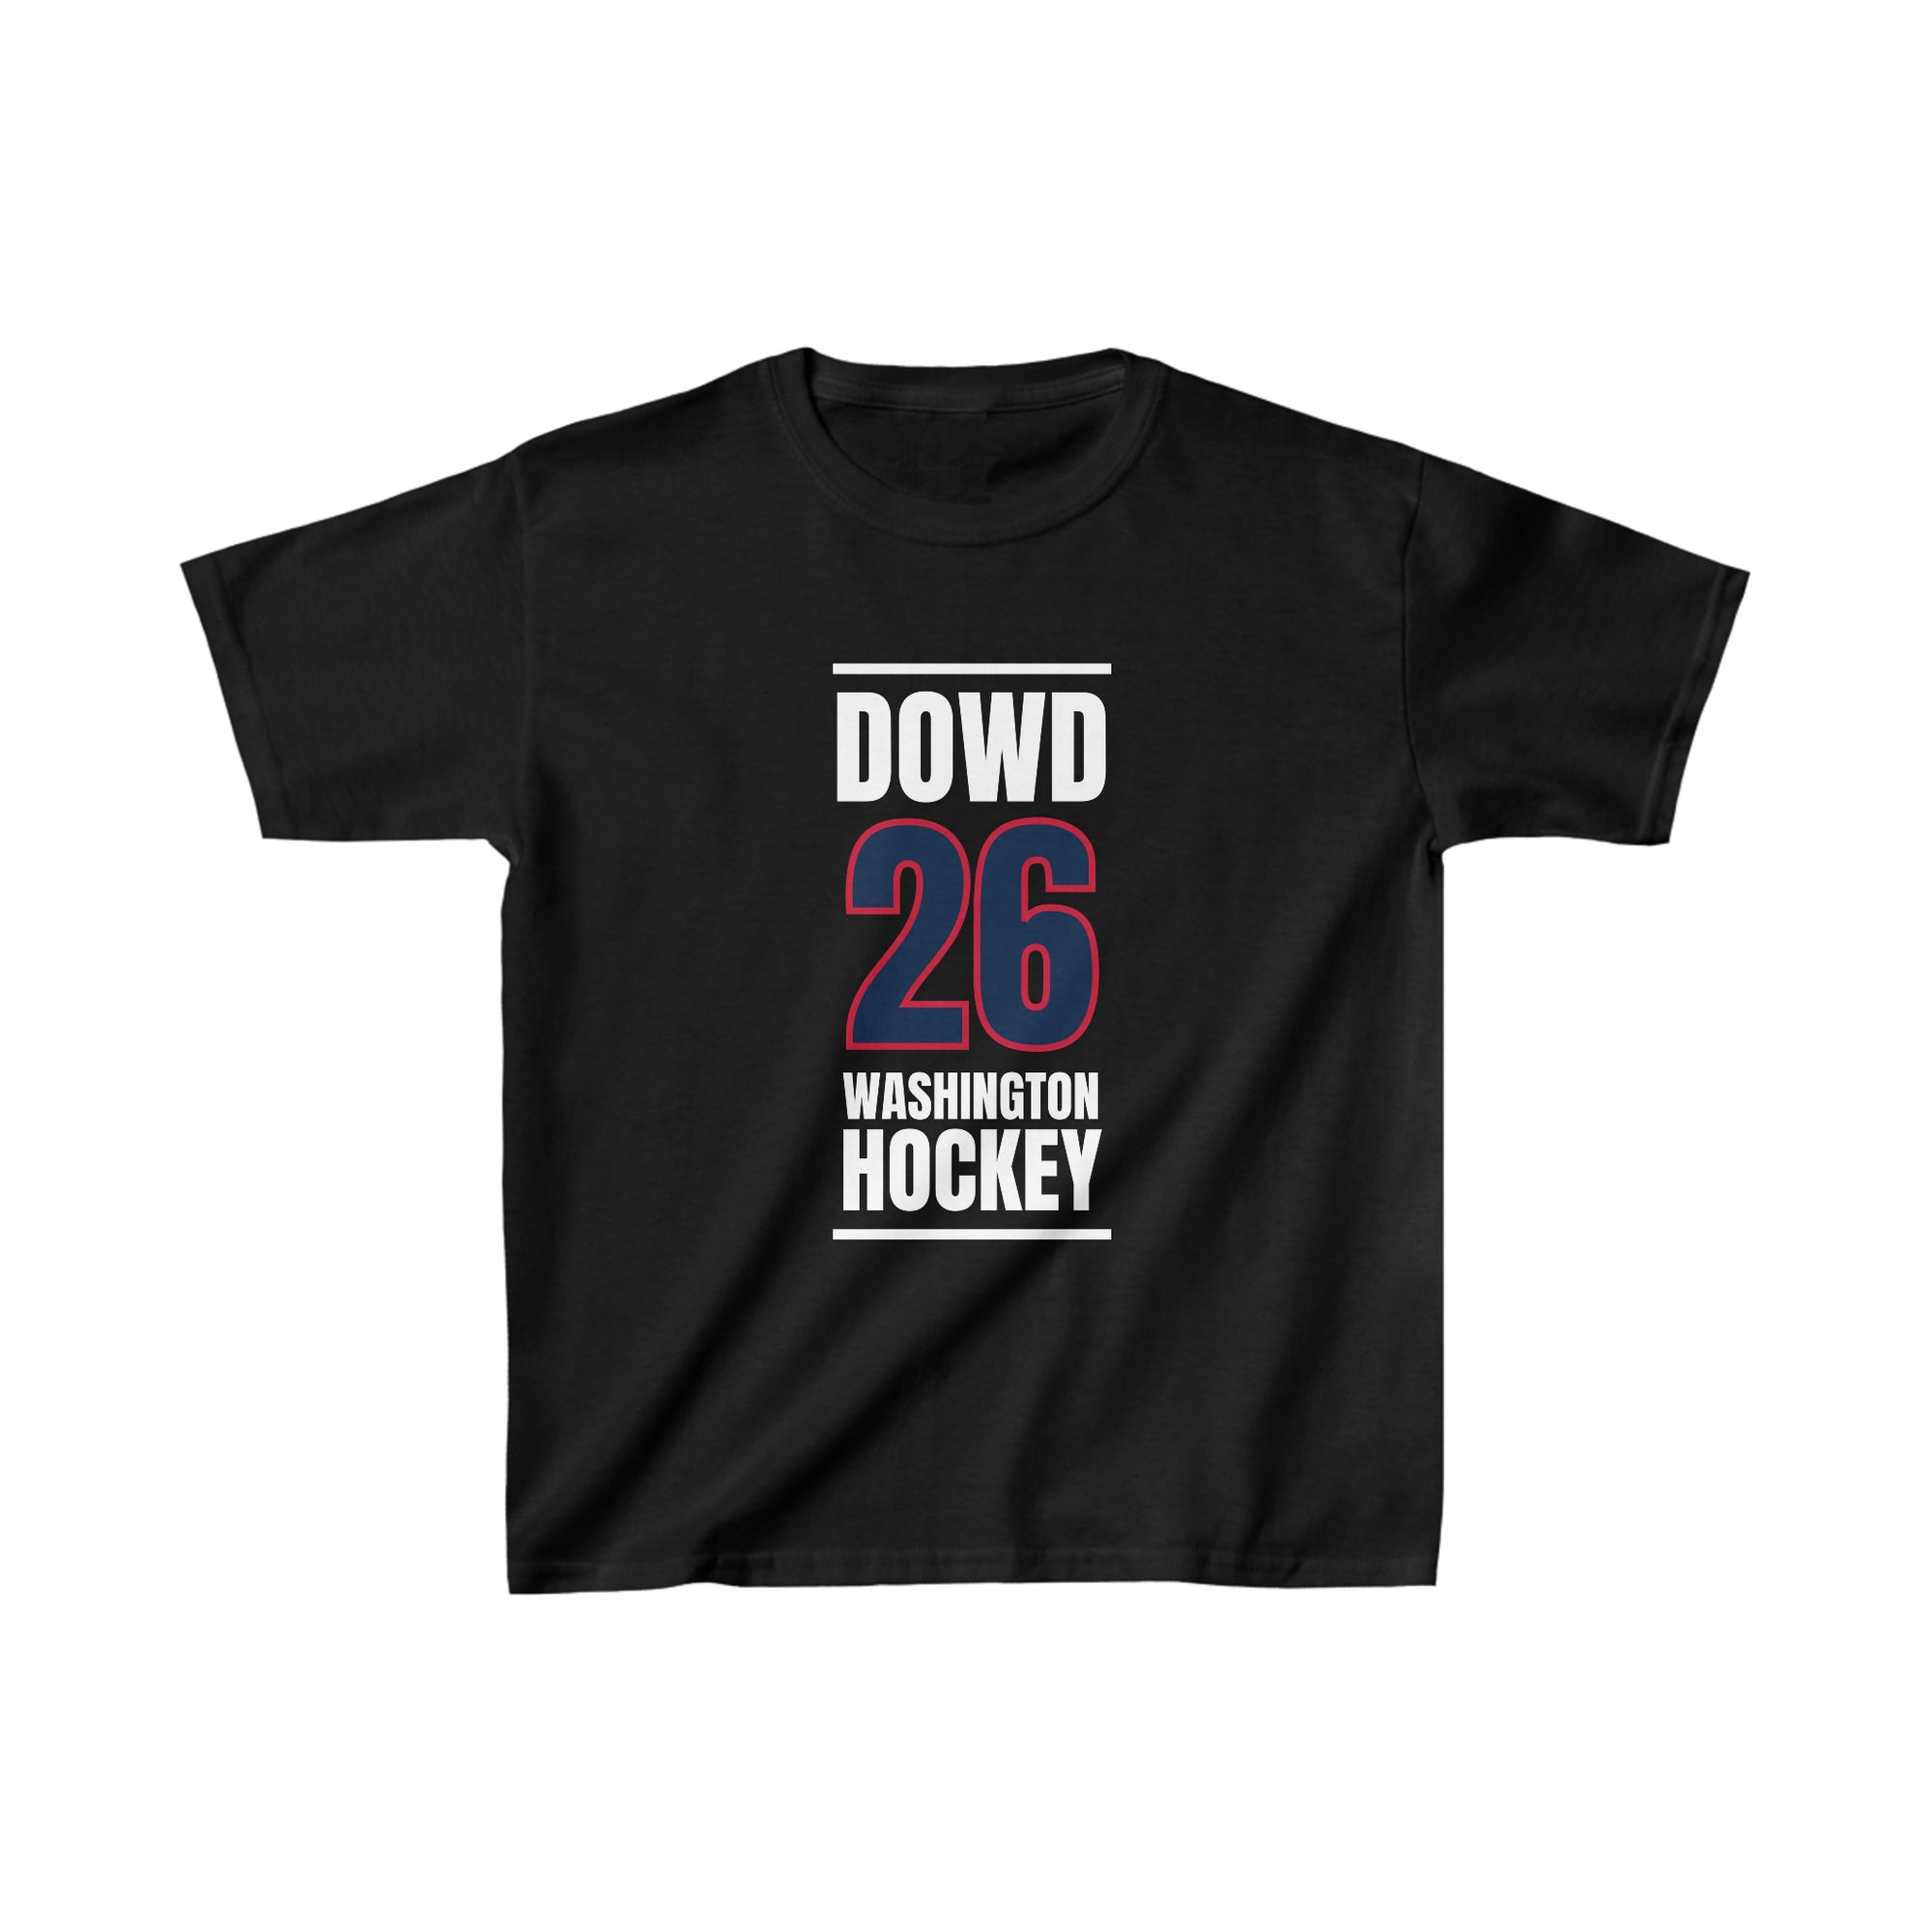 Dowd 26 Washington Hockey Navy Vertical Design Kids Tee